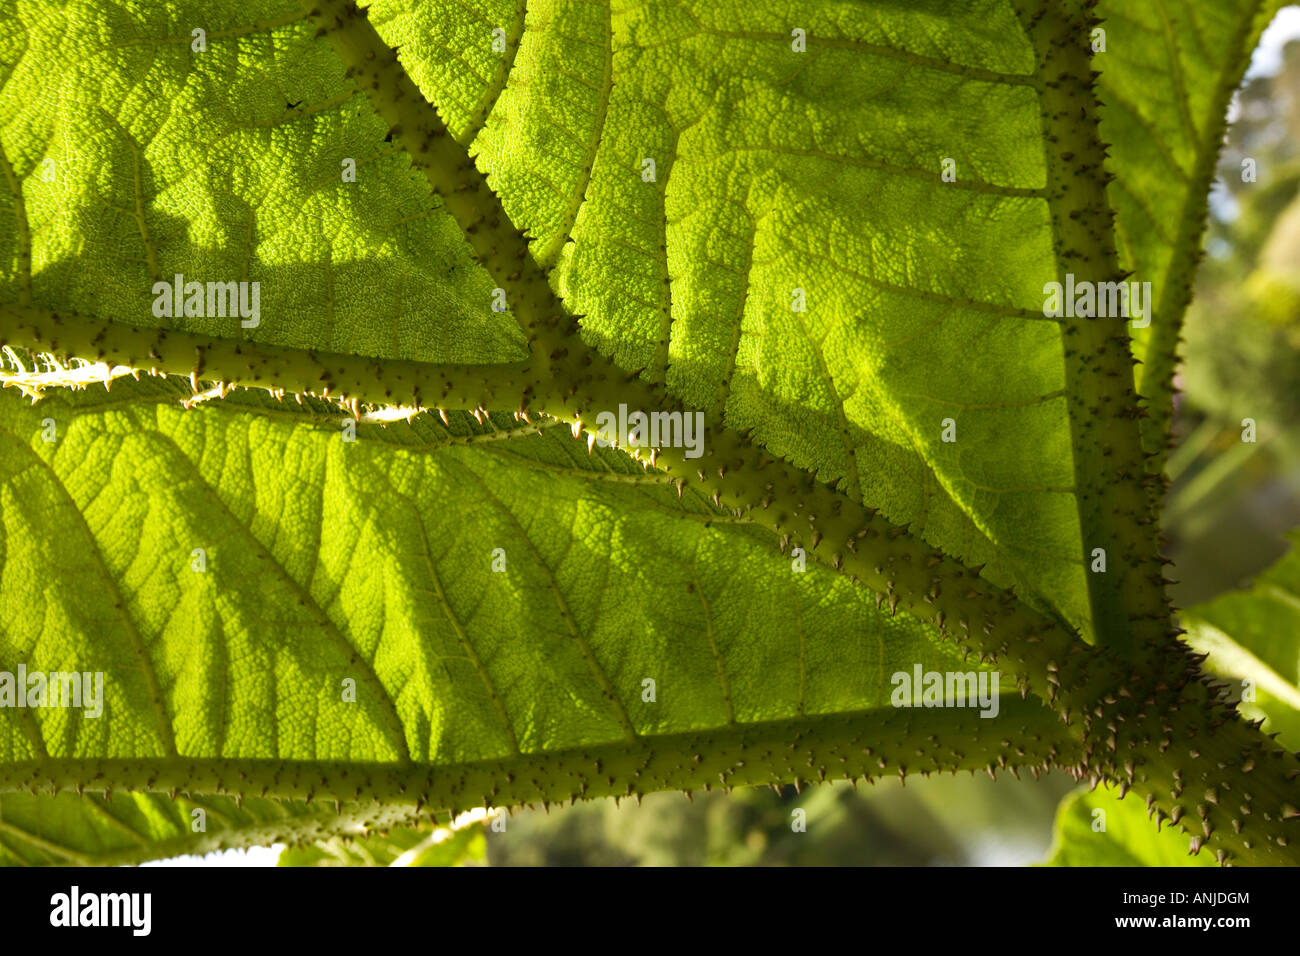 UK Northern Ireland County Down Mount Stewart House Gardens leaf of Gunnera manicata Chilean Rhubarb Stock Photo